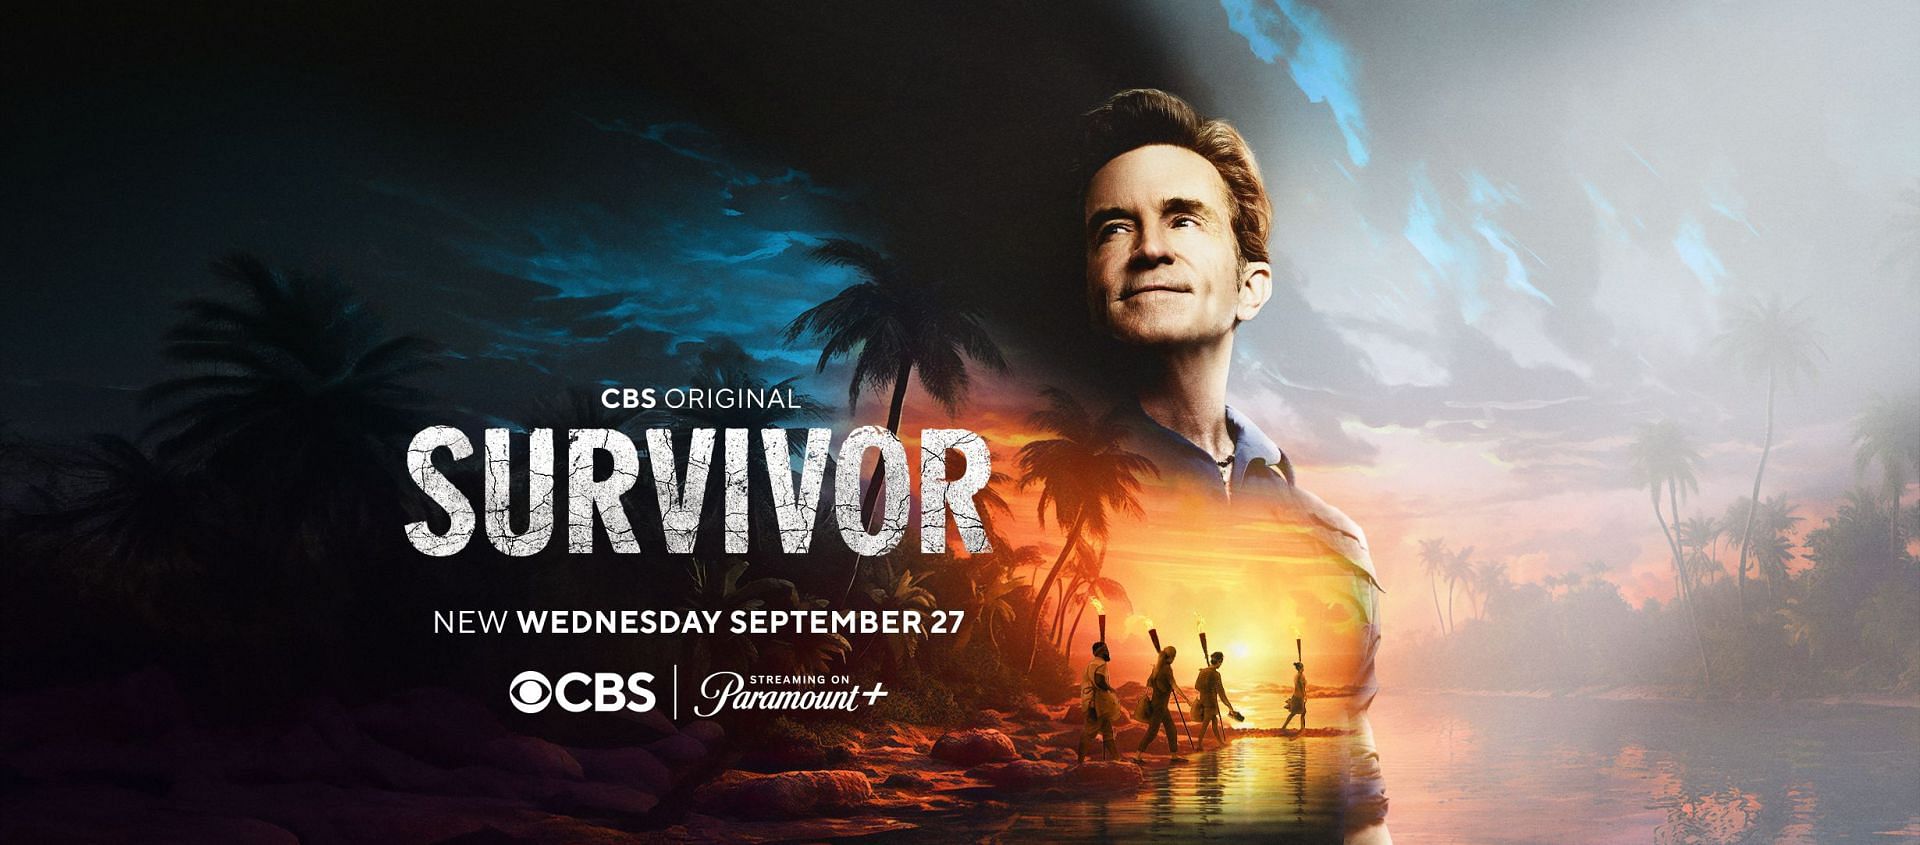 Survivor 45 set premieres on CBS this September 27 (Image via Survivor/ CBS)